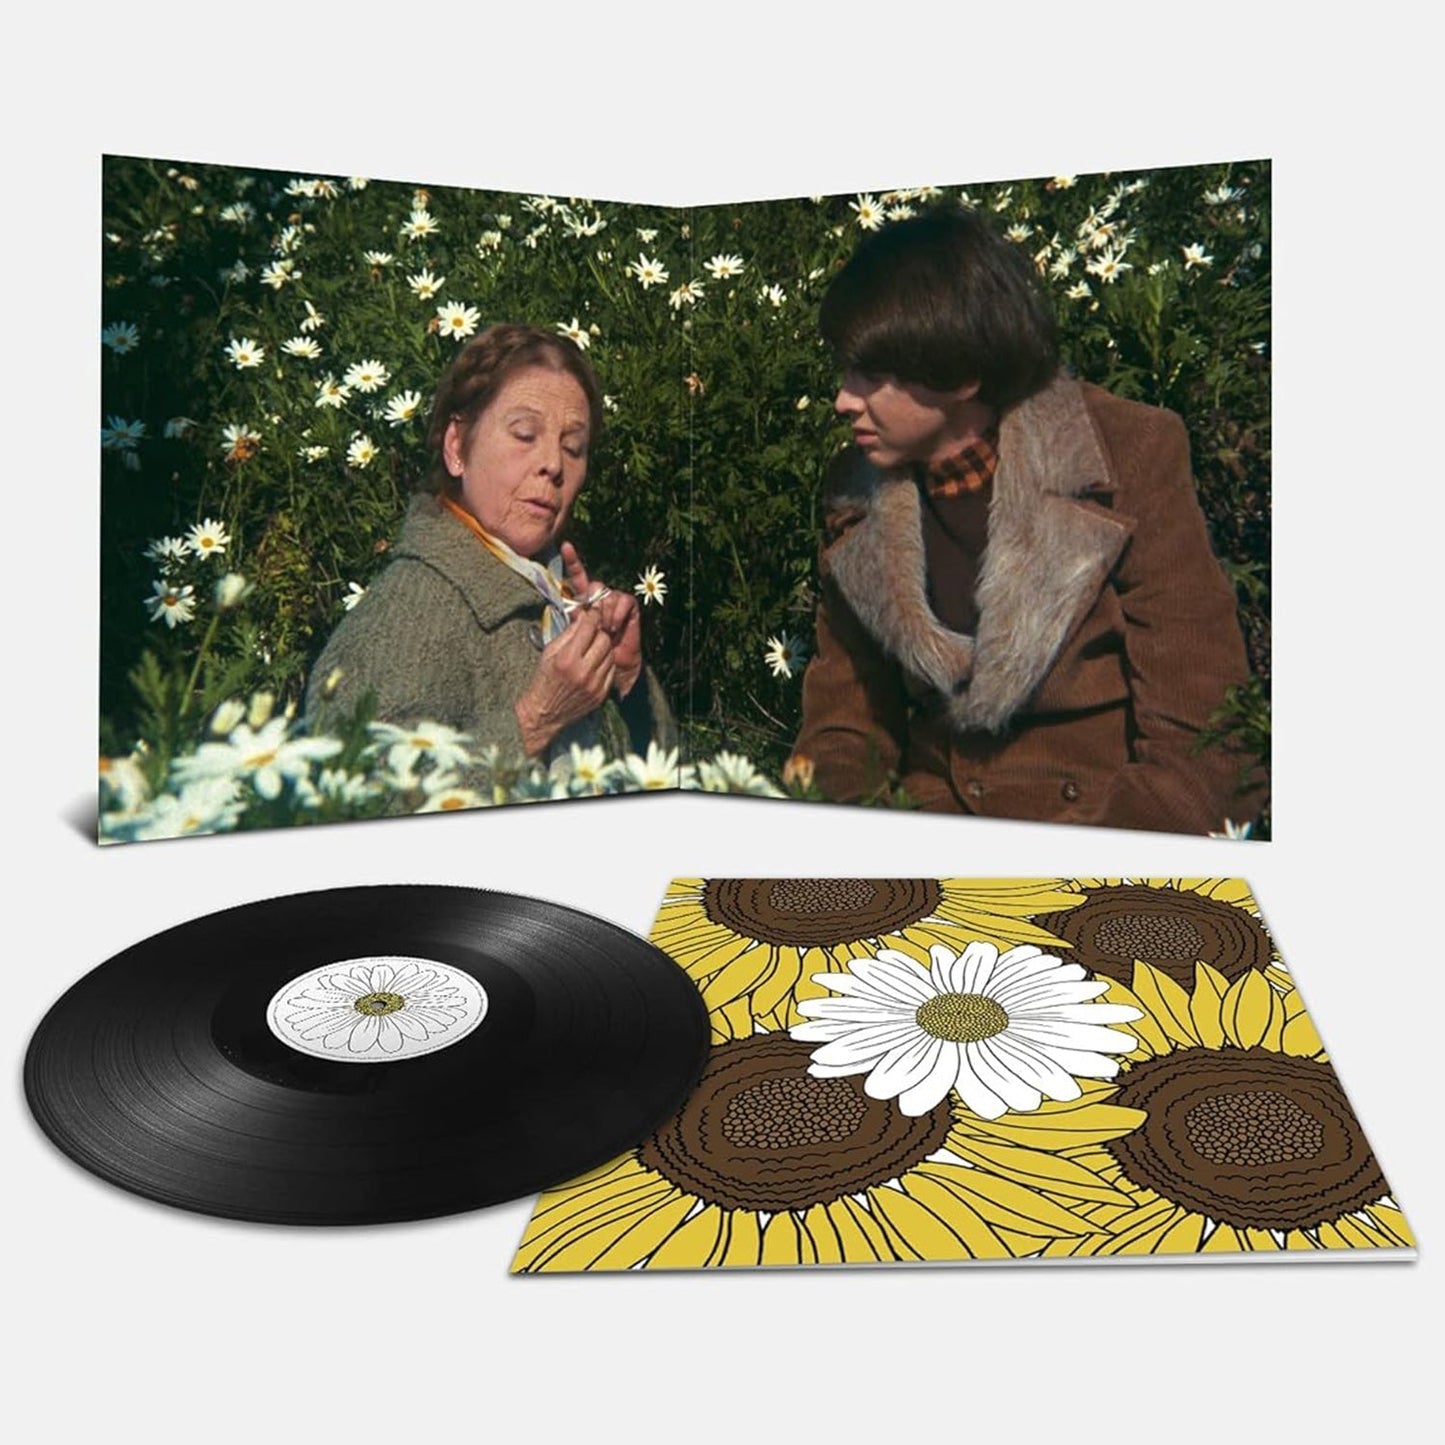 Harold And Maude (Original Motion Picture Soundtrack) (Vinyl LP)